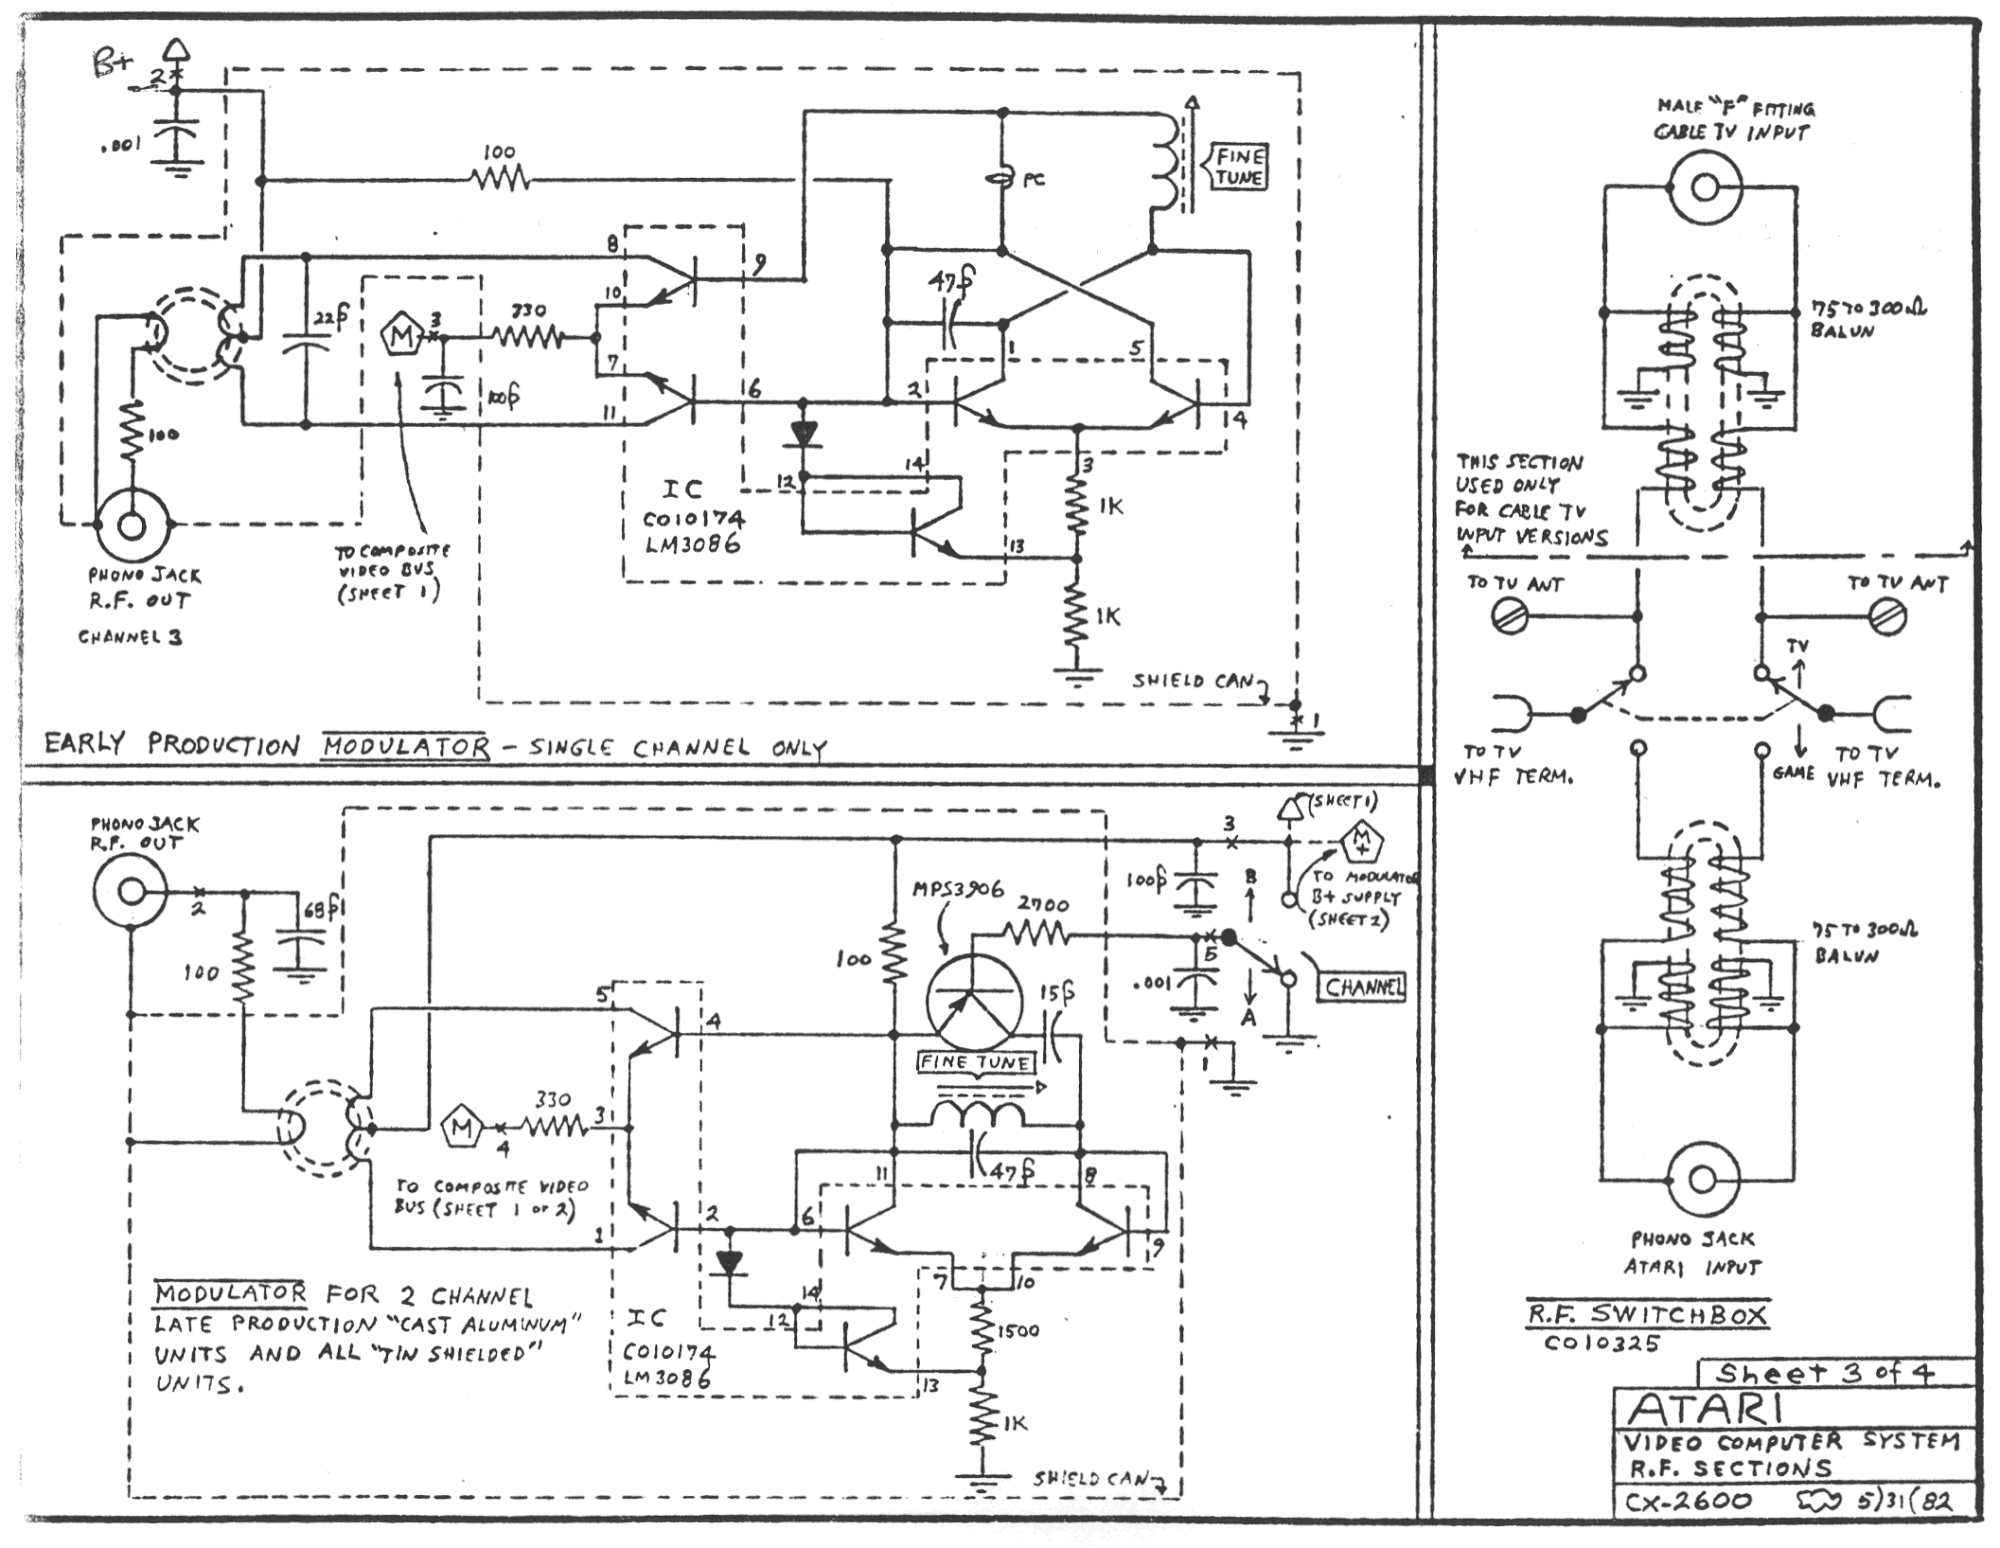 Atari 2600 RF Sections Schematic